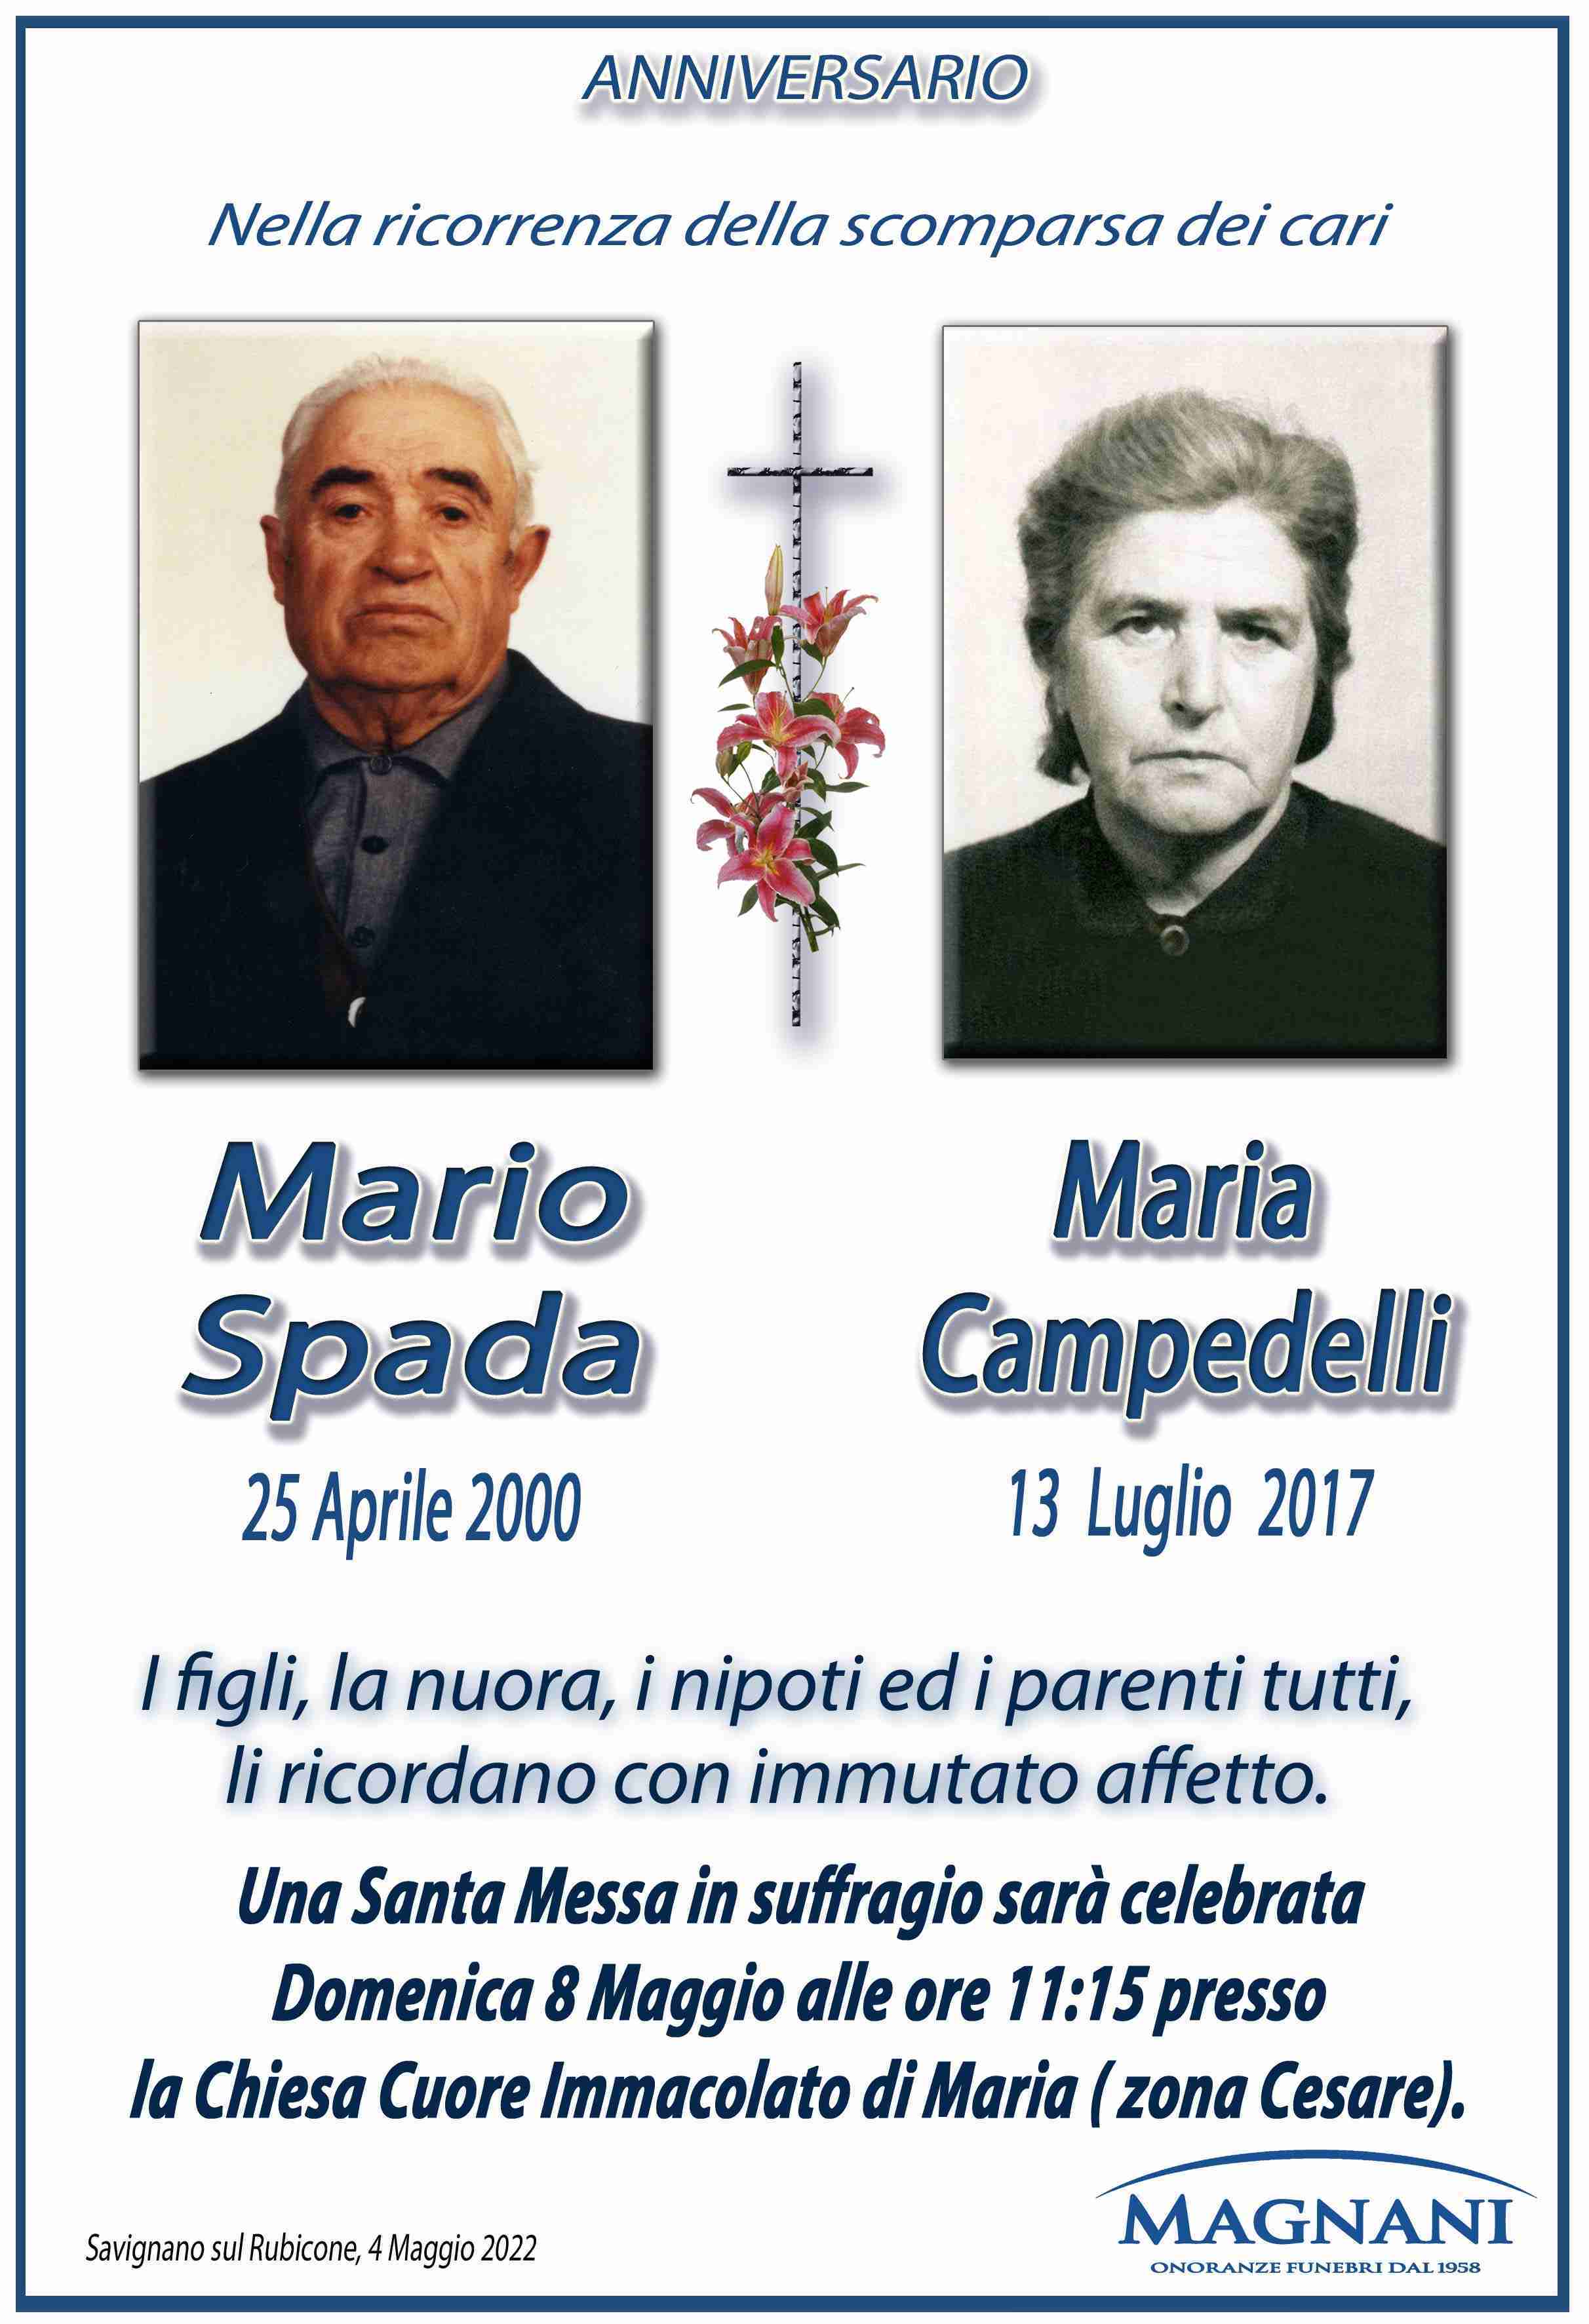 Mario Spada e Maria Campedelli